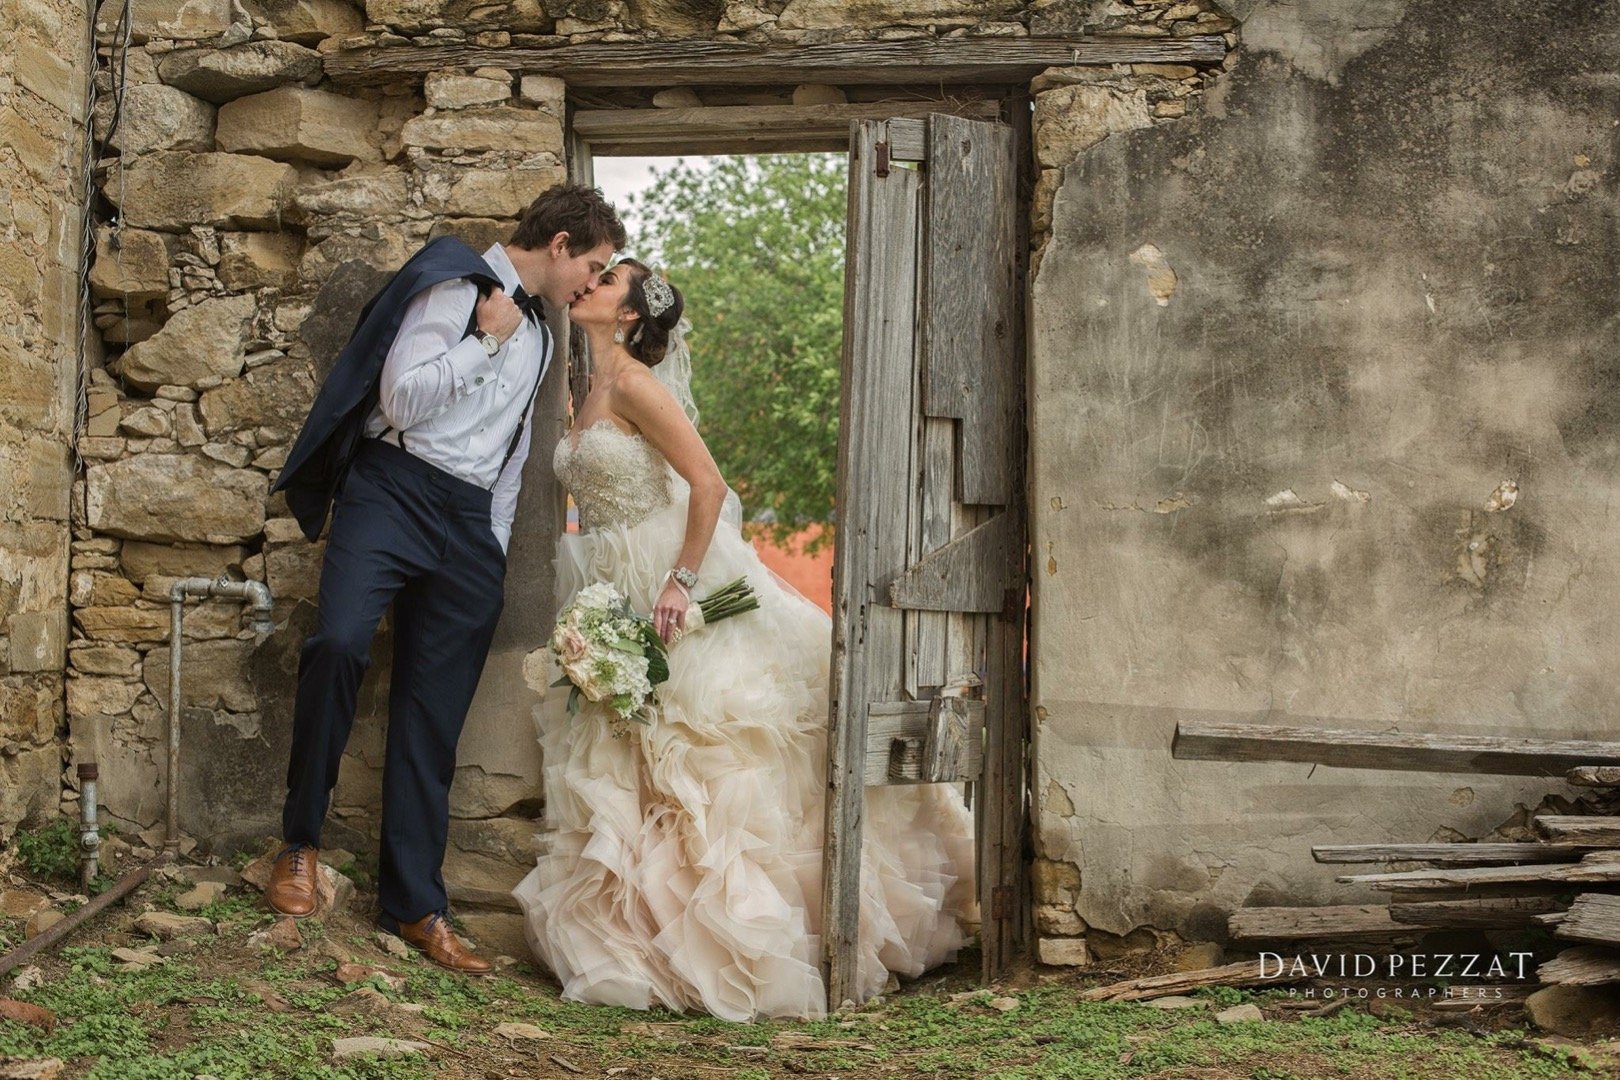 David Pezzat Photographer_San Antonio Weddings